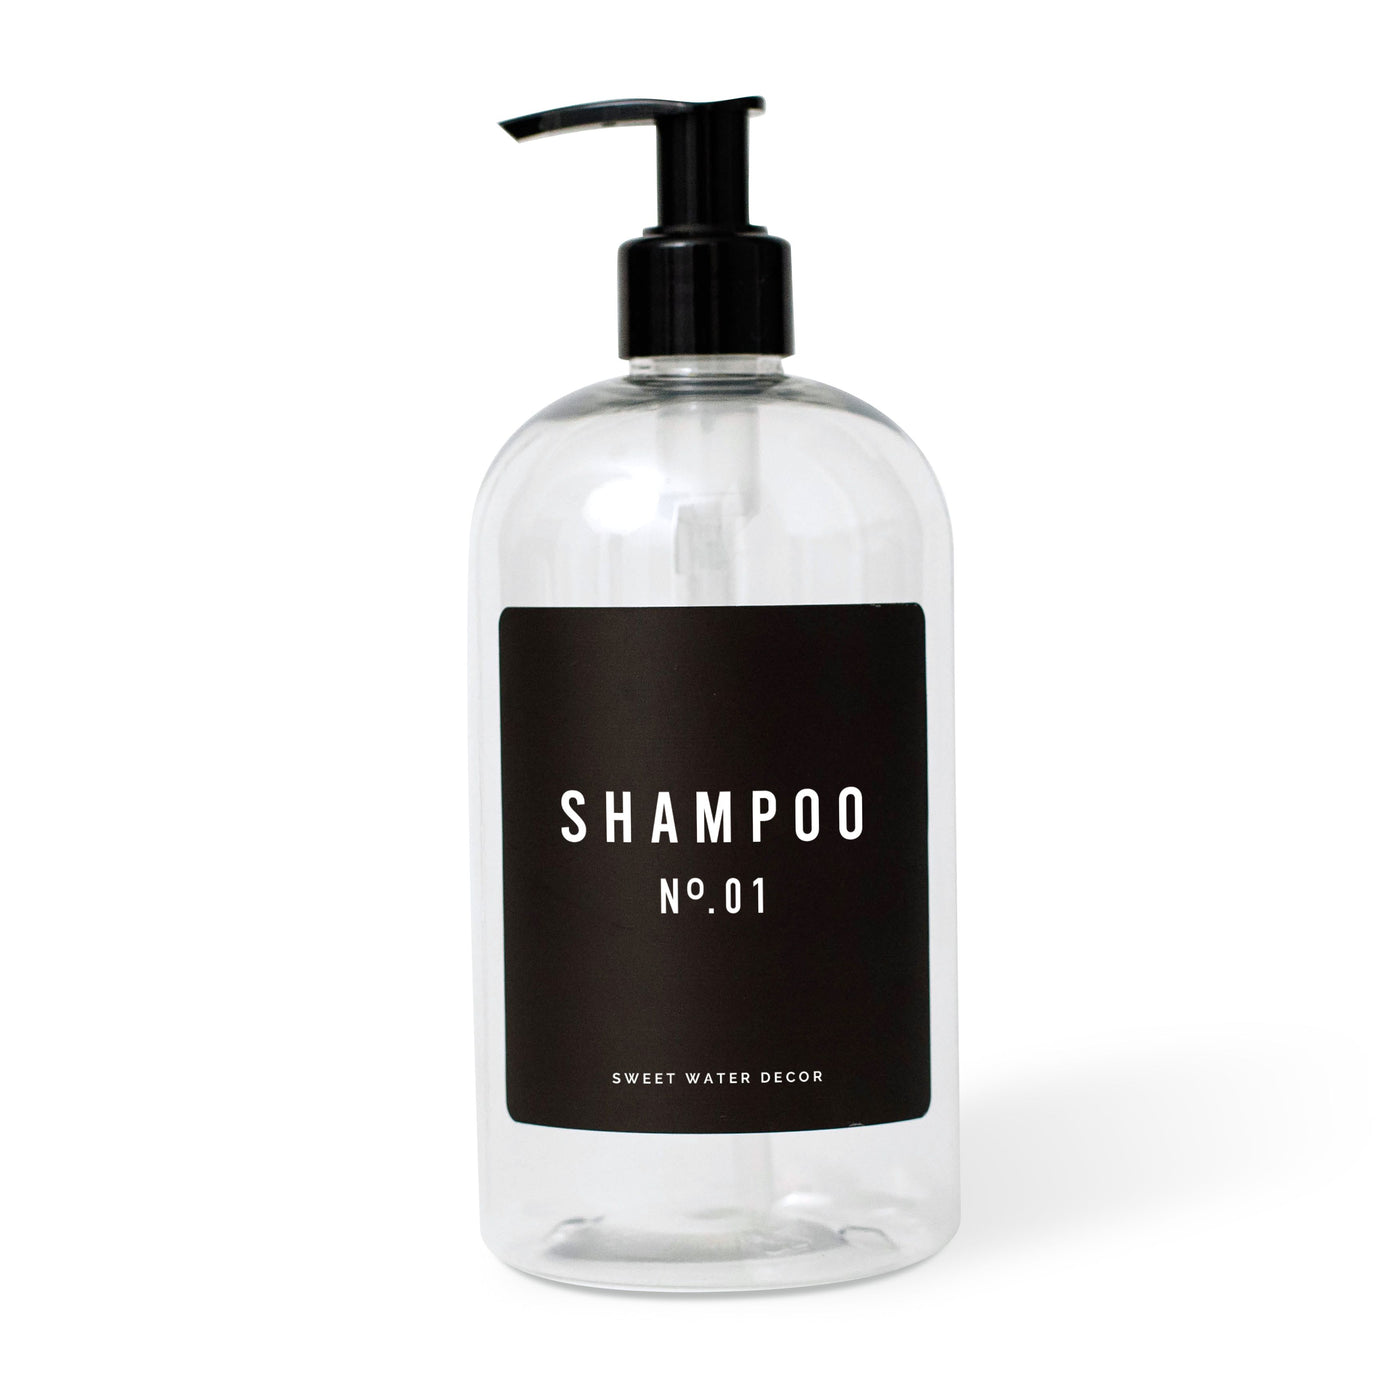 16oz Clear Plastic Shampoo Dispenser - Black Label - Sweet Water Decor - Dispenser - farmhouse decor